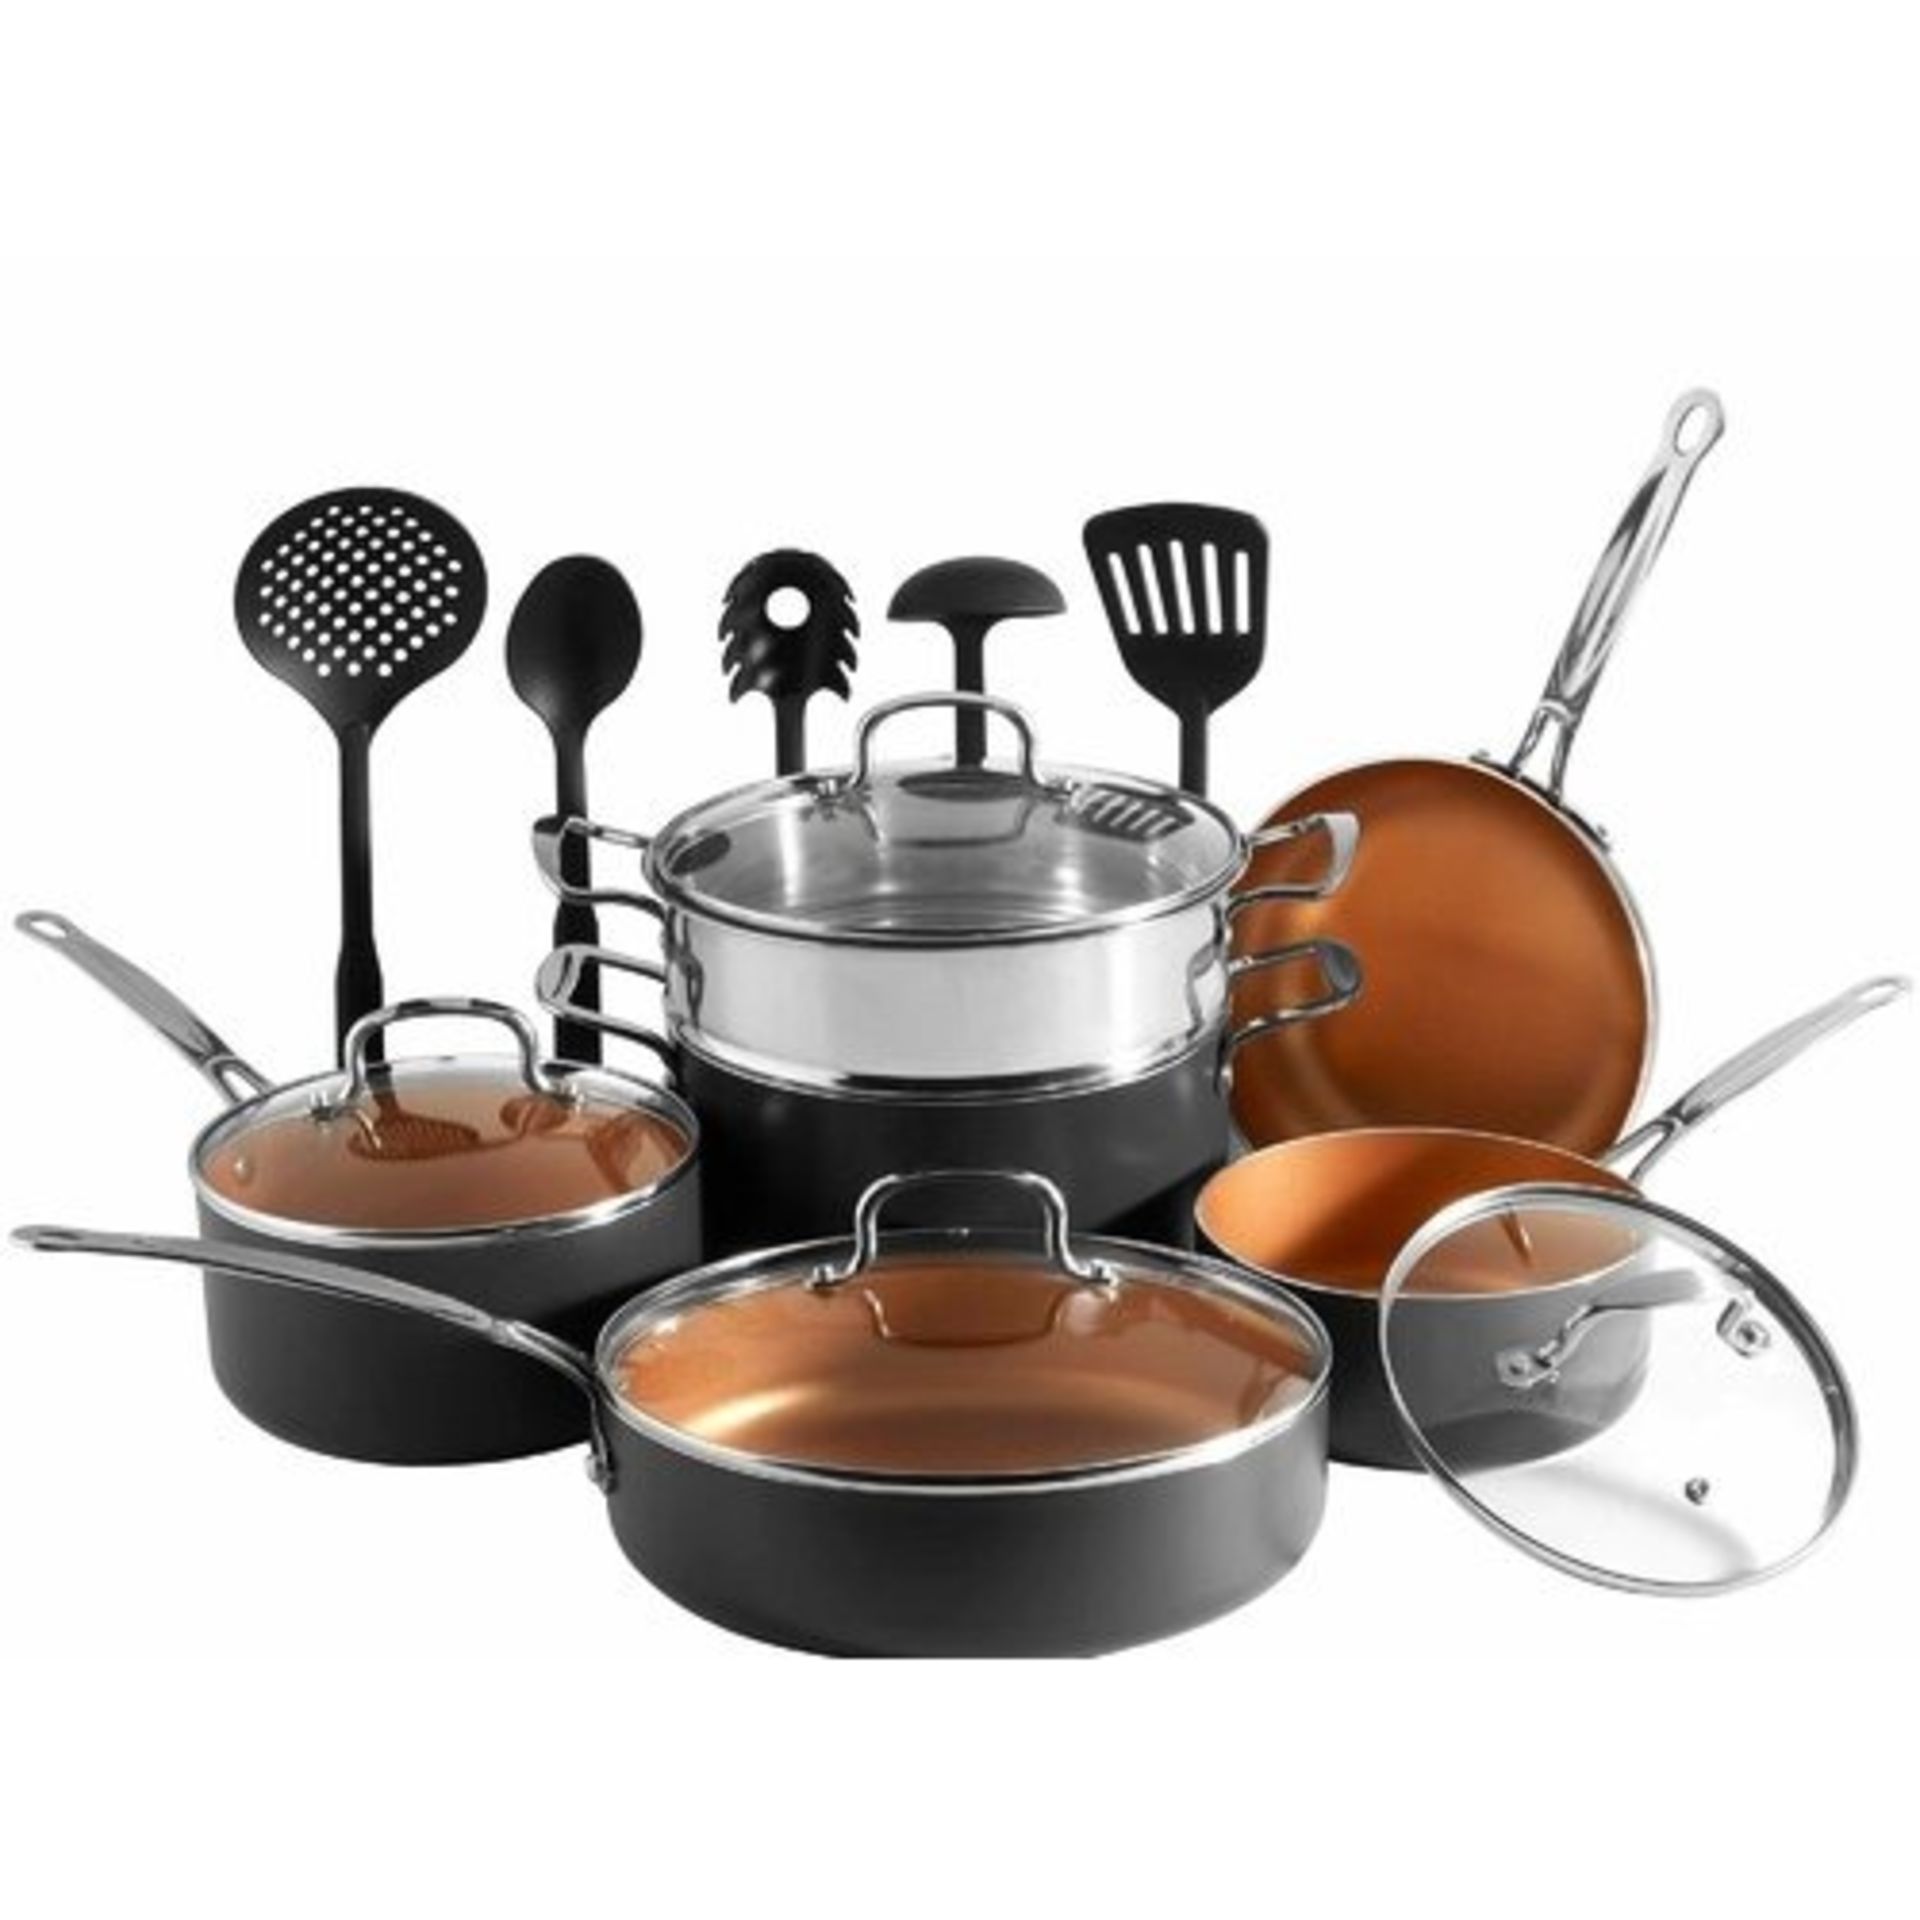 11pc Copper Cookware Set - ER33